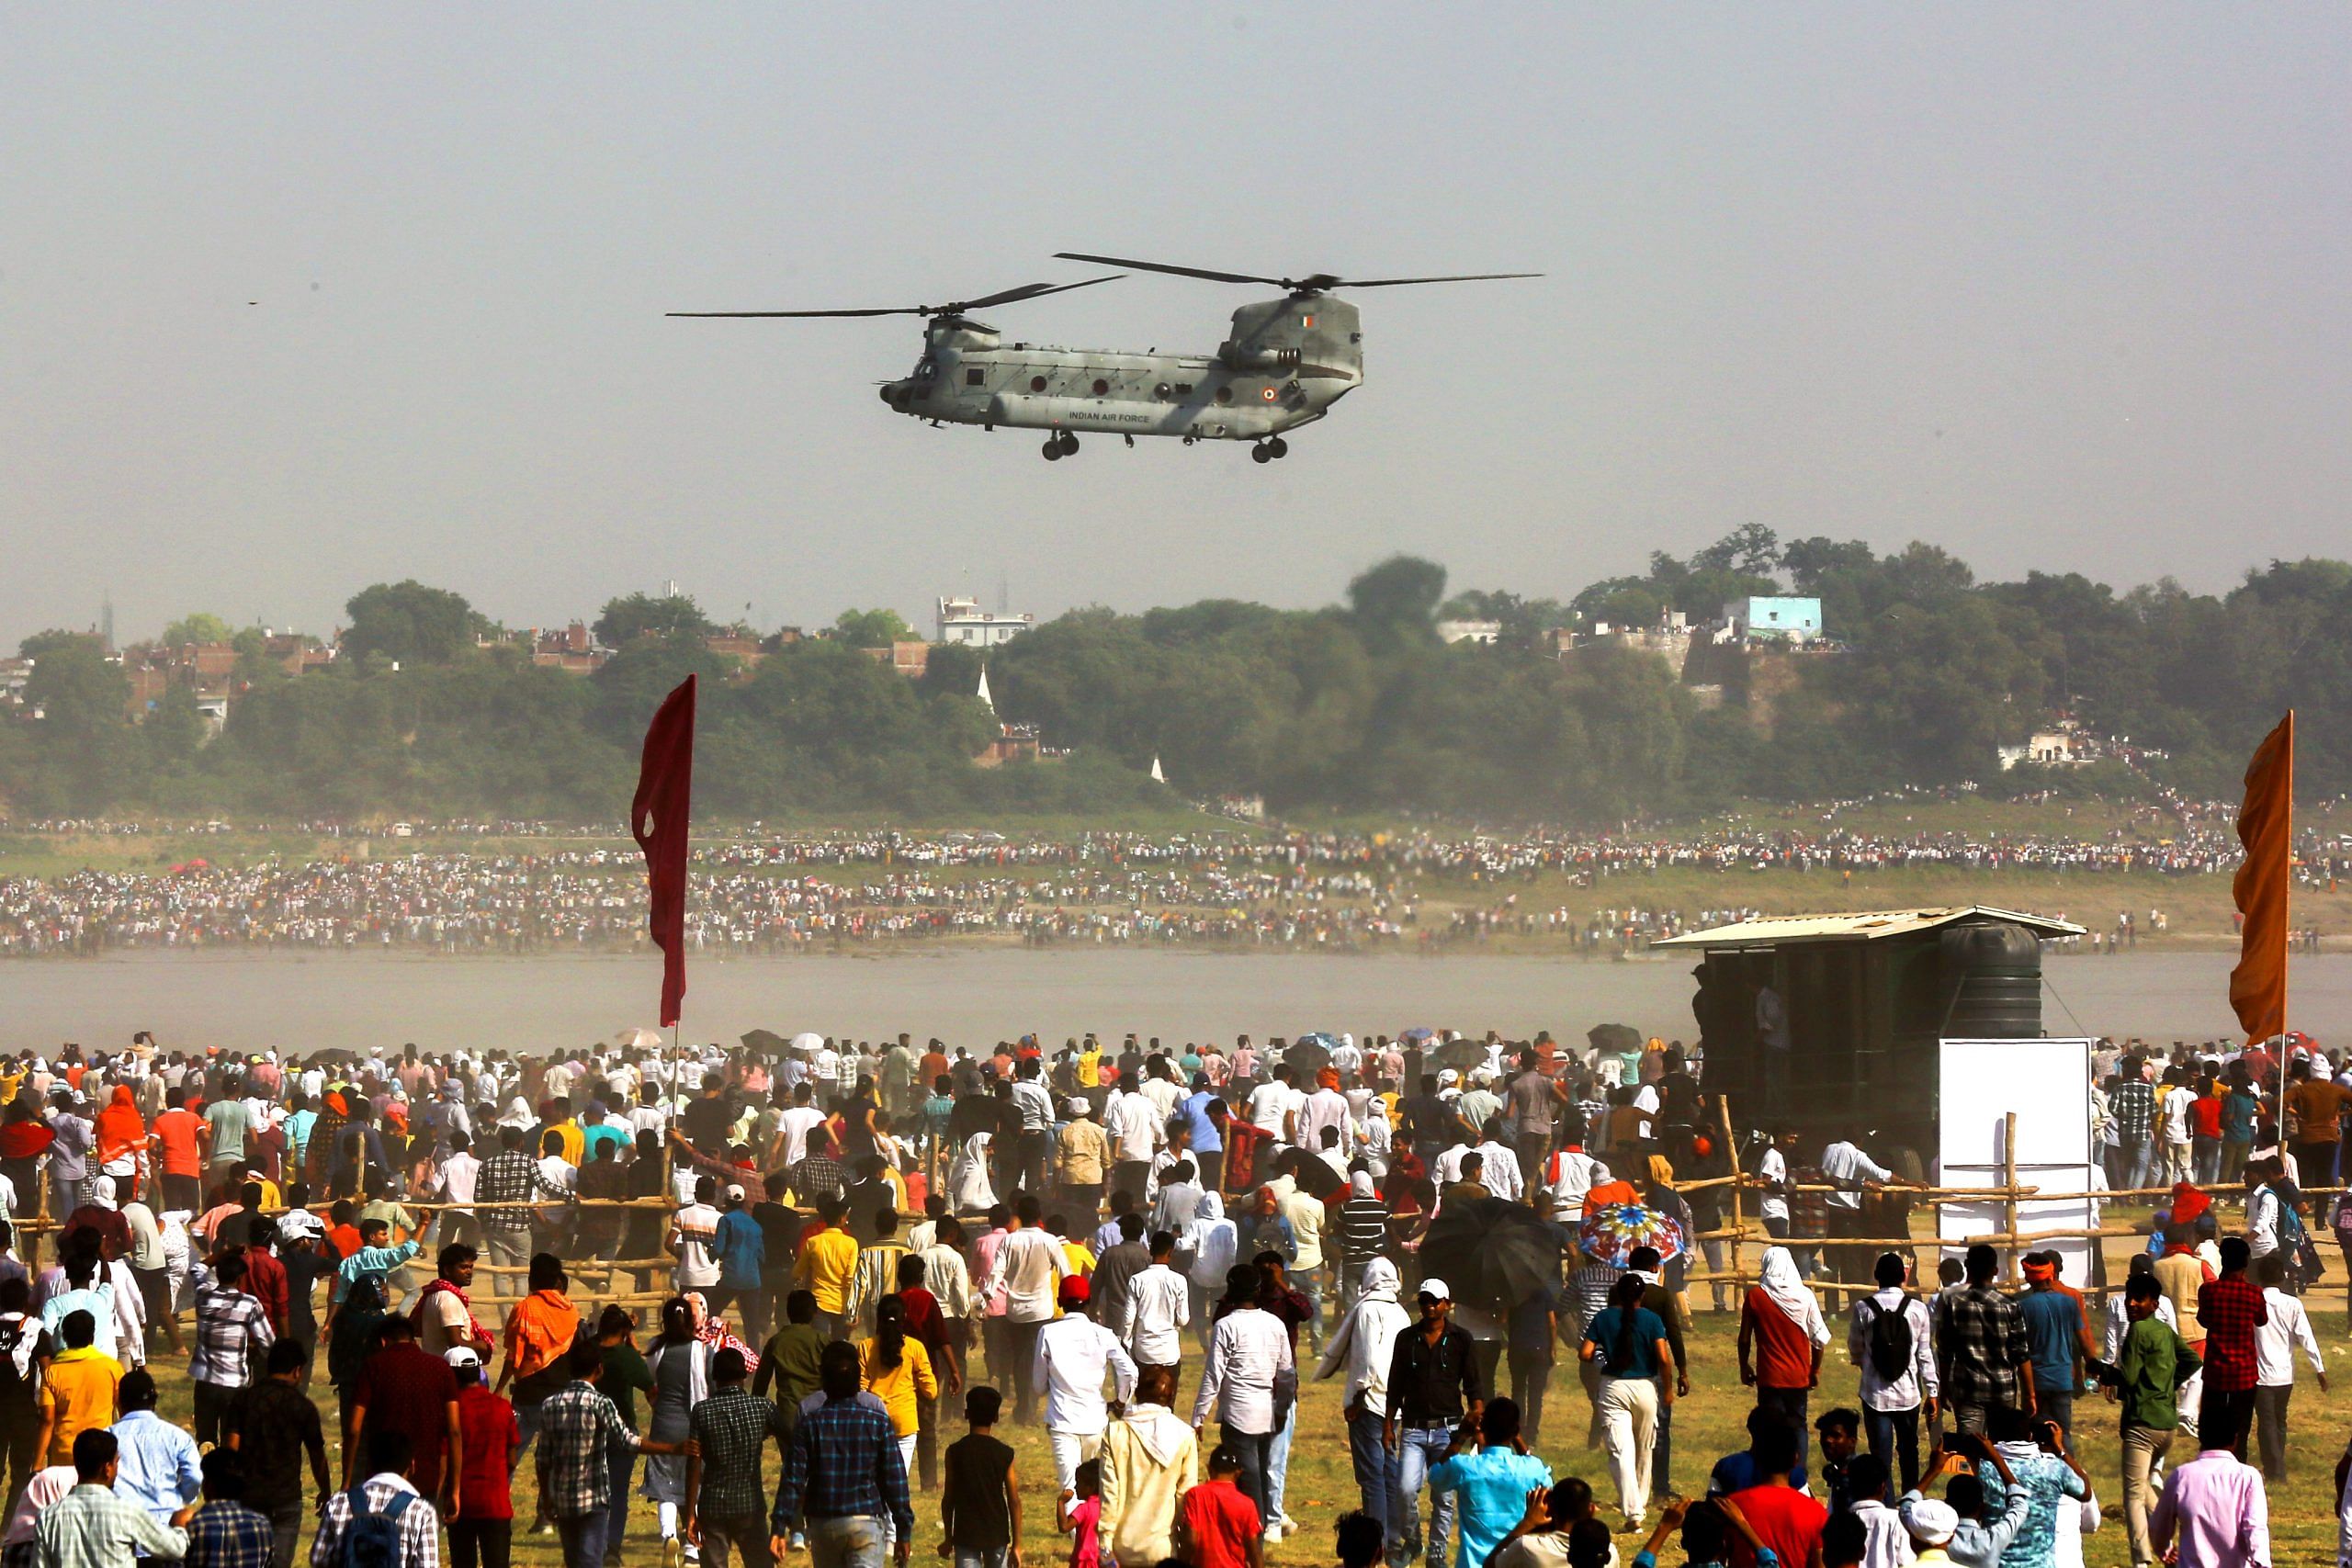 IAF’s Chinook helicopter flies over Prayagraj as a sea of people watch in awe | Suraj Singh Bisht | ThePrint